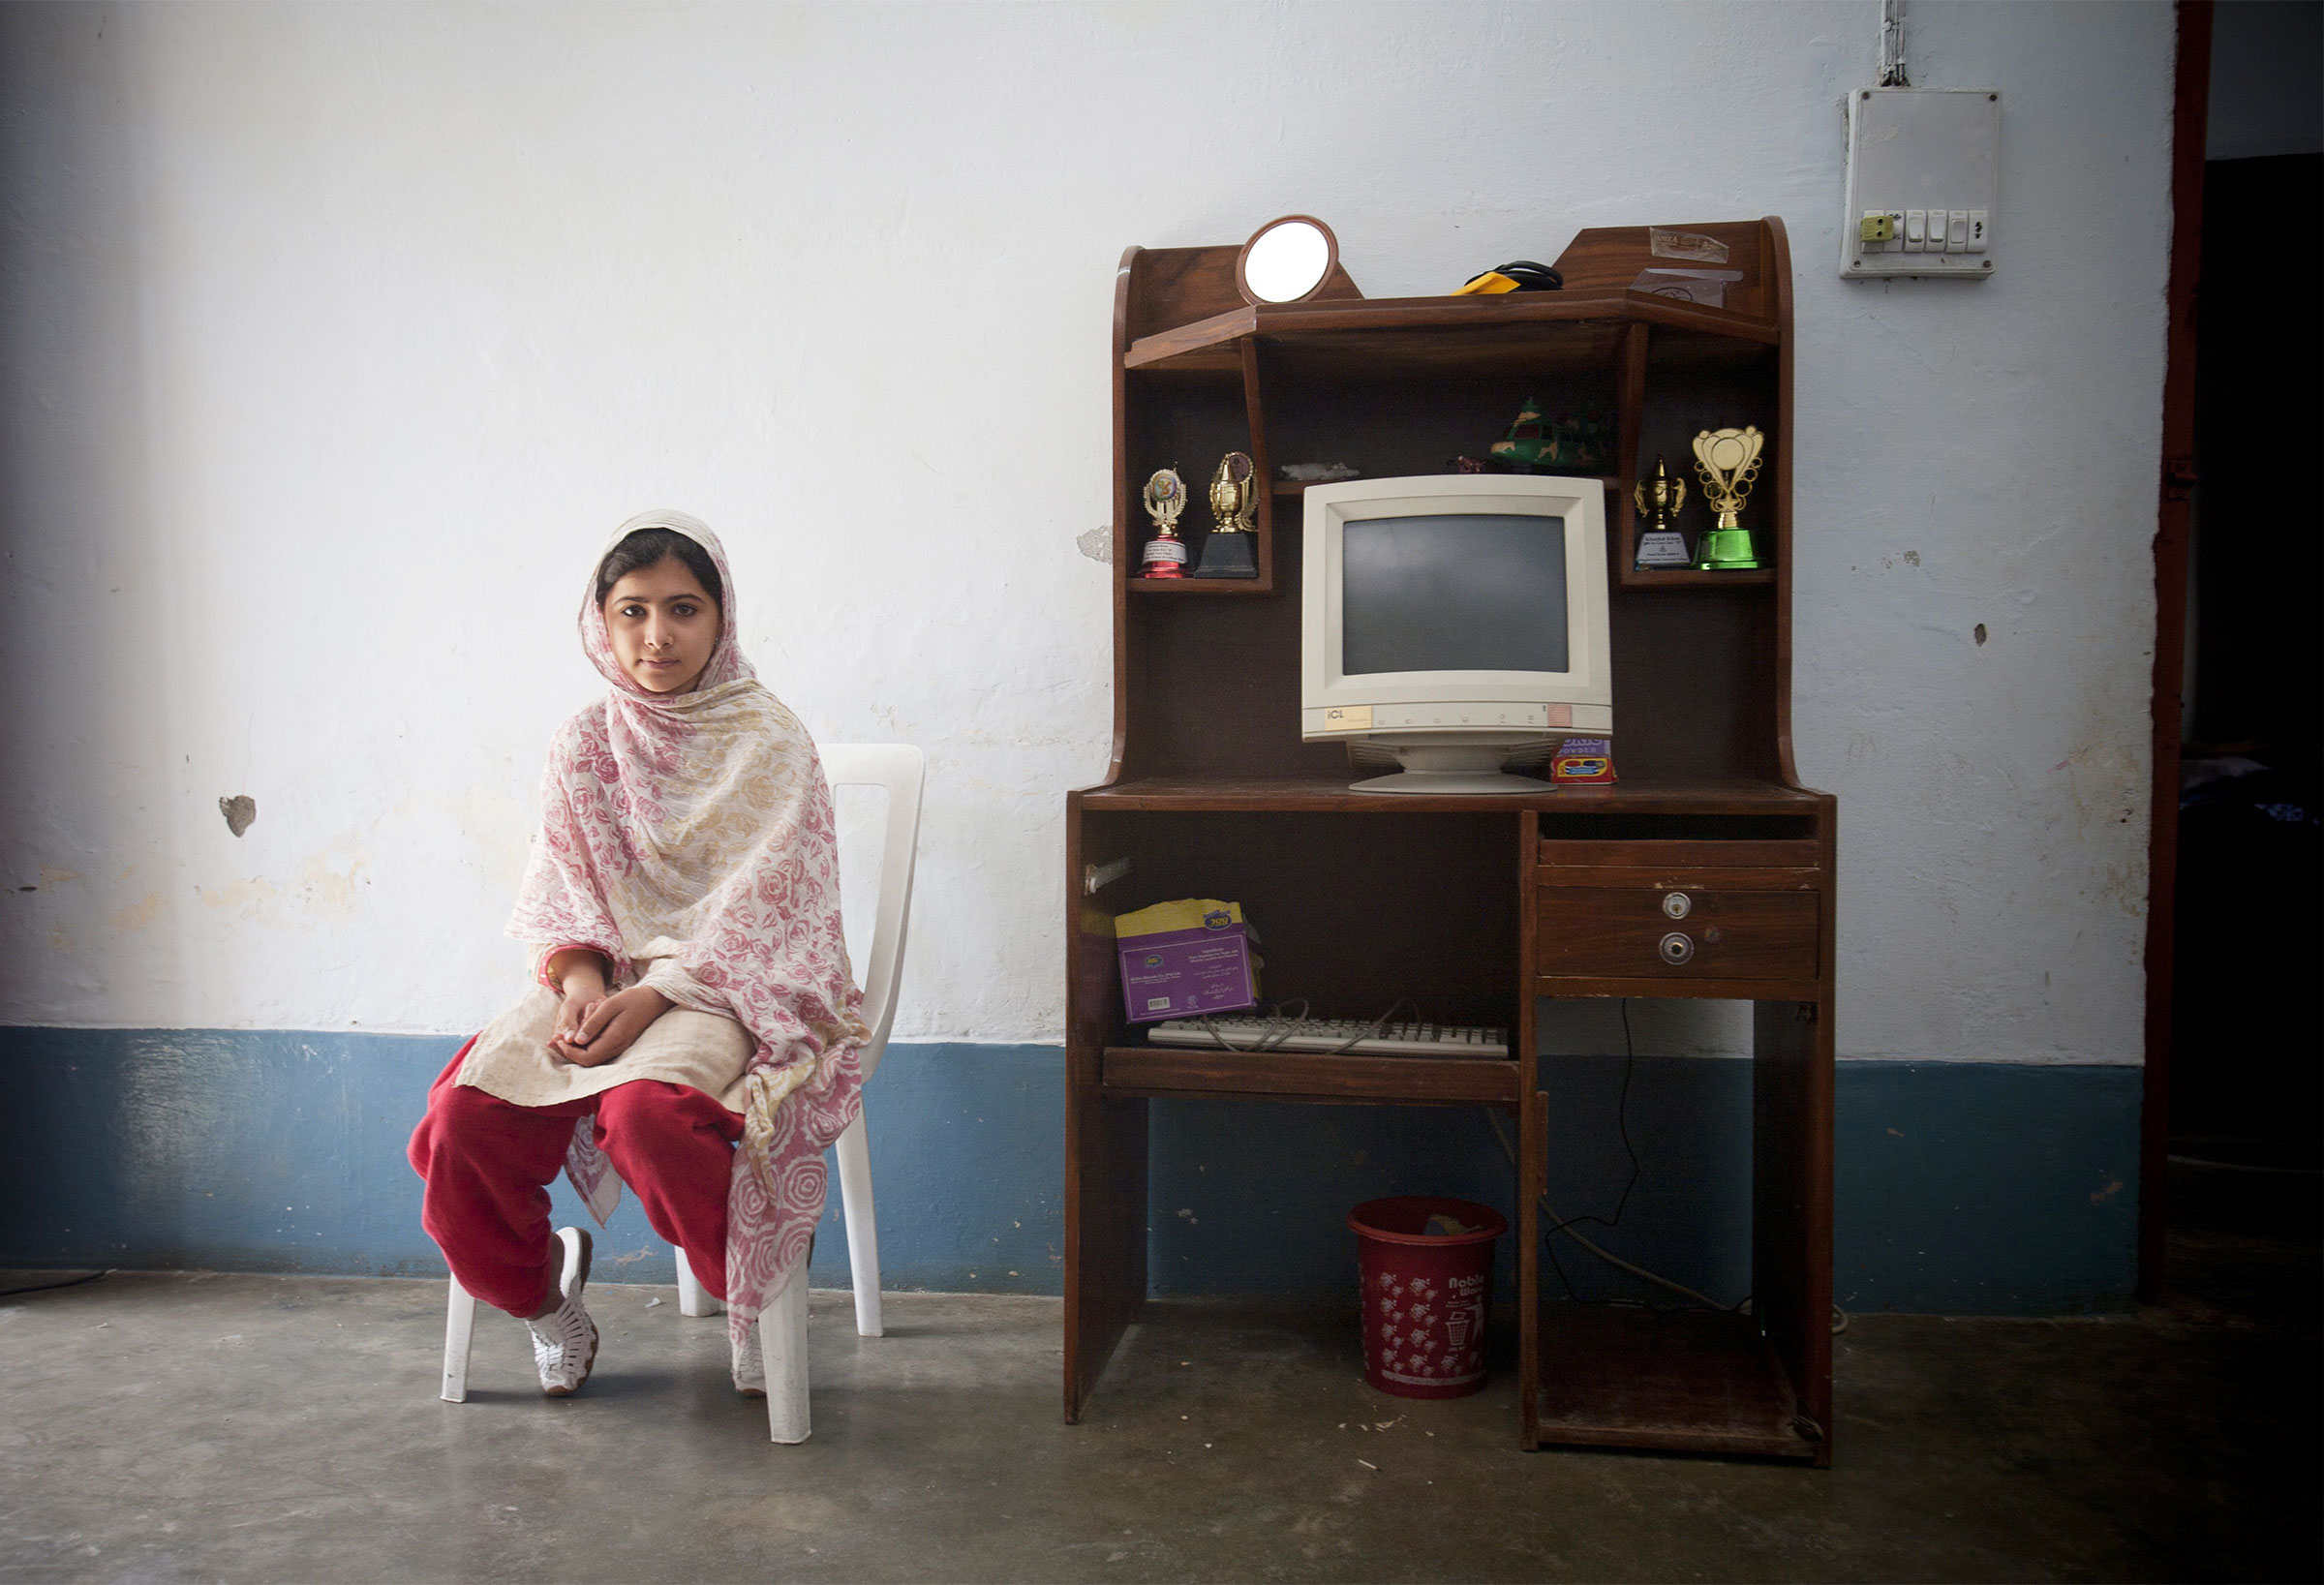 Malala Yousafzai on March 26, 2009 in Peshawar, Pakistan. (Veronique de Viguerie—Getty Images)